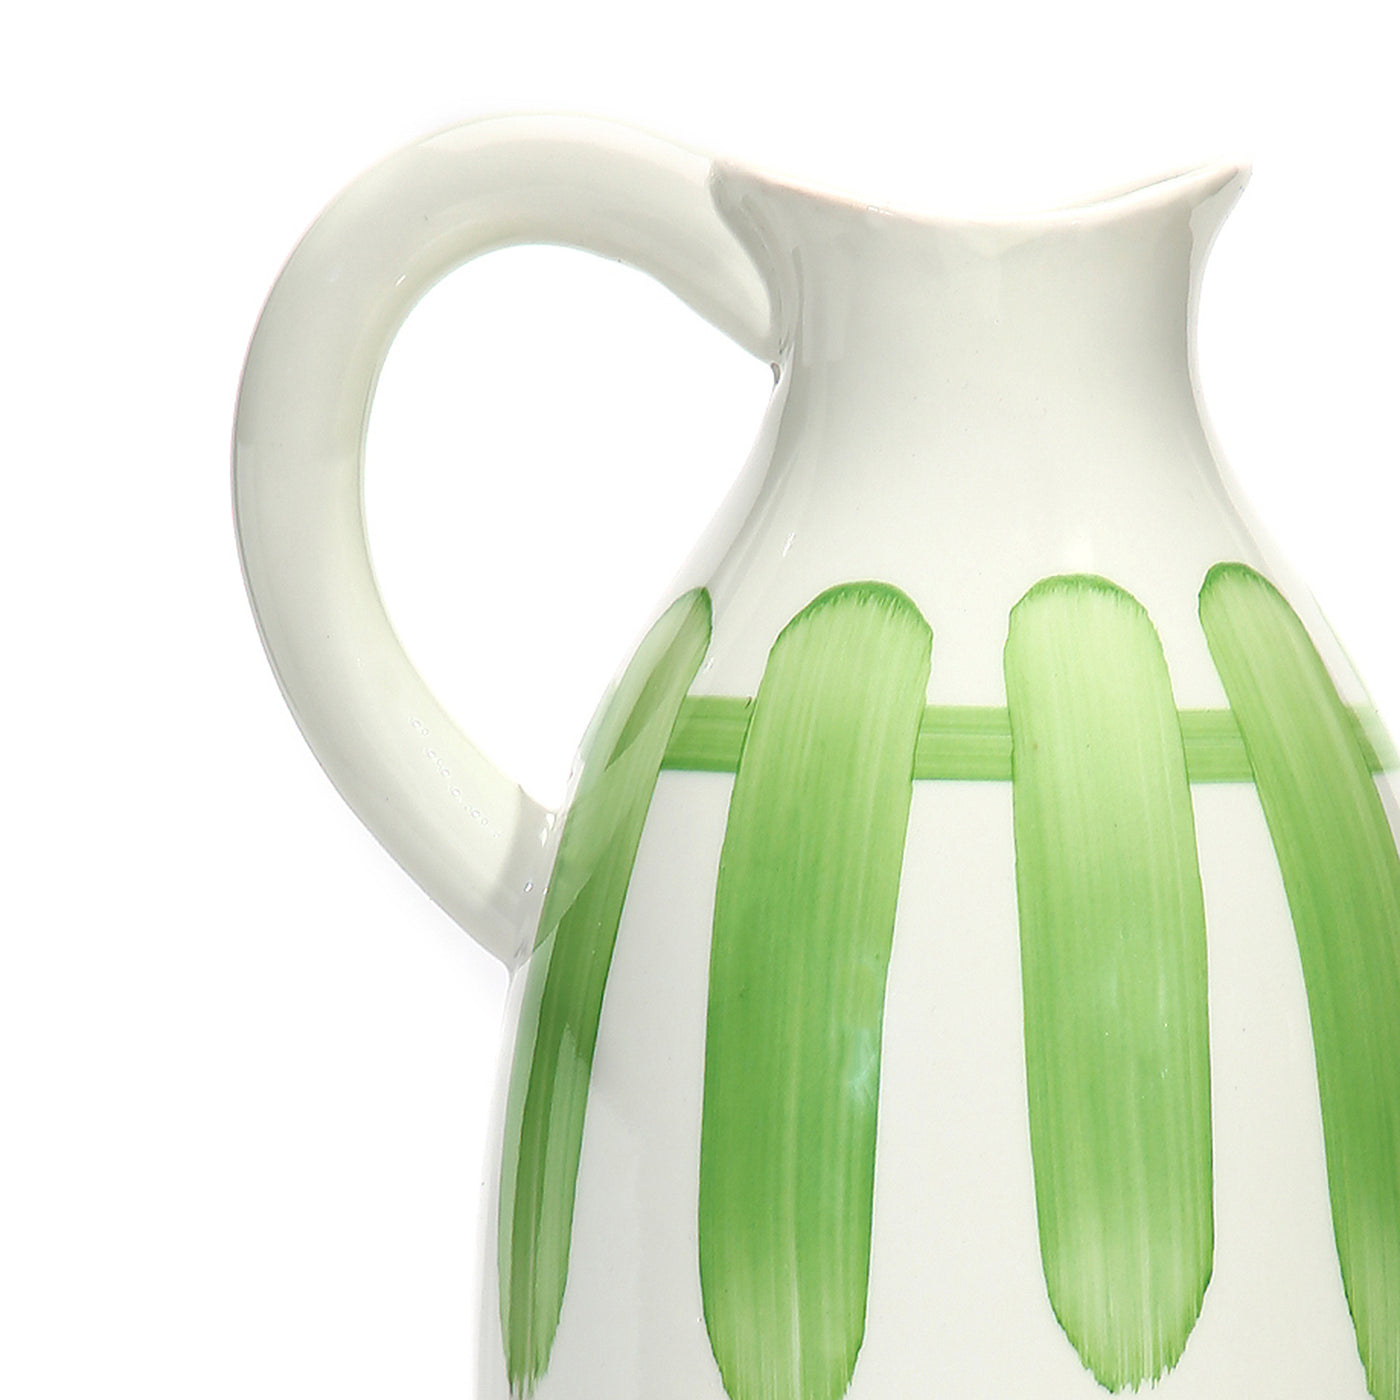 Amalfiee Green & White Artistic Studio Pottery Handmade Ceramic Jug Vase